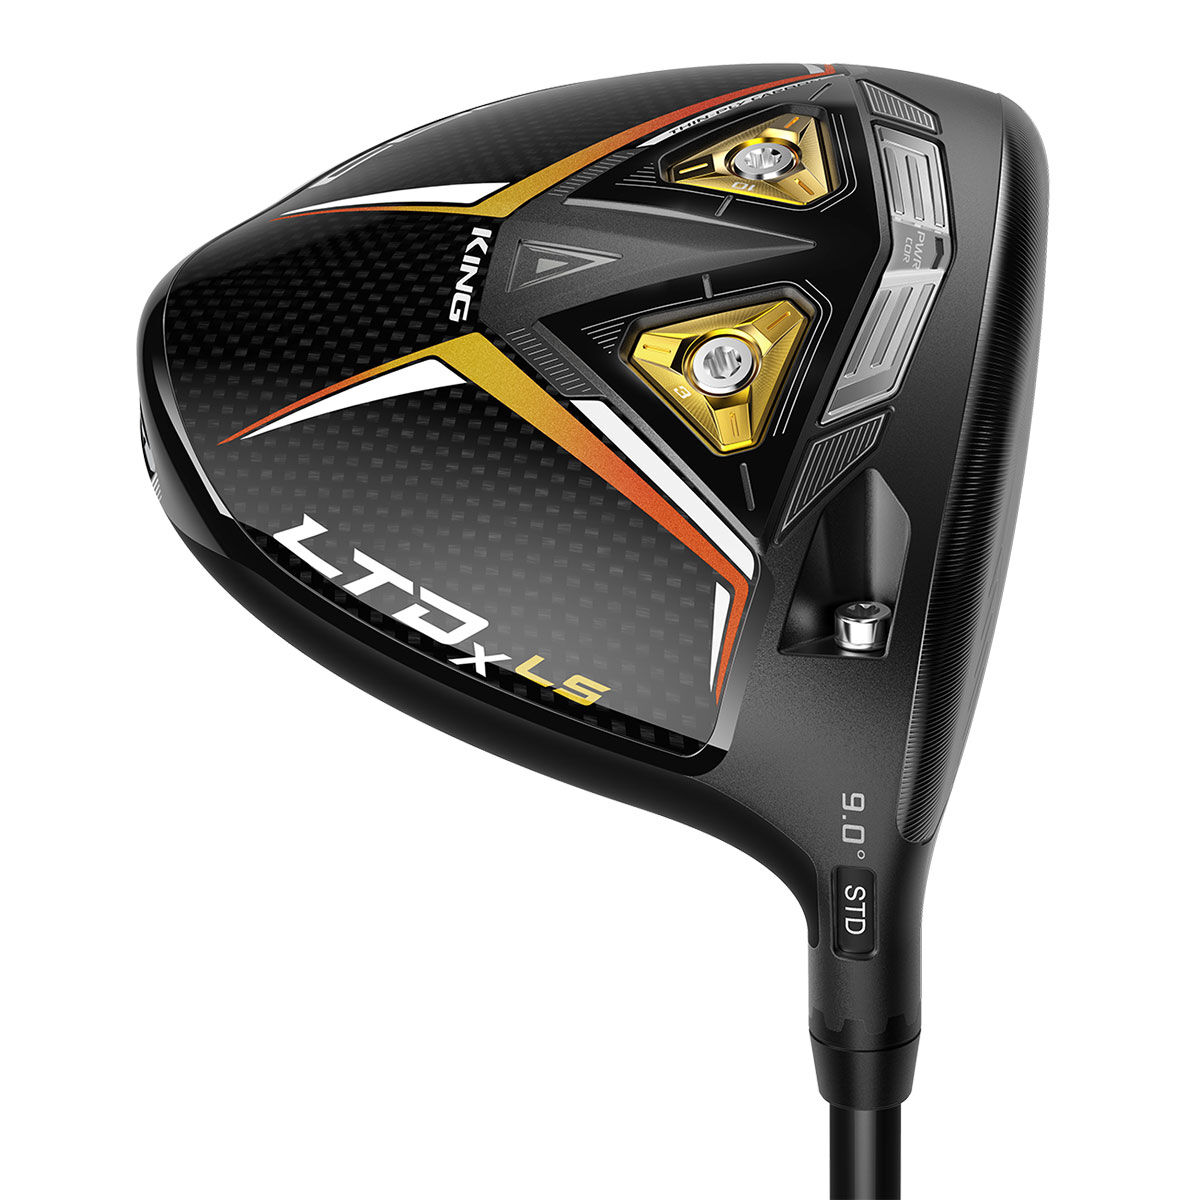 Cobra Golf Black and Yellow King LTDx LS Right Hand Project x Hzrdus Smoke im10 Stiff Golf Driver, Size: 9deg | American Golf, 9deg